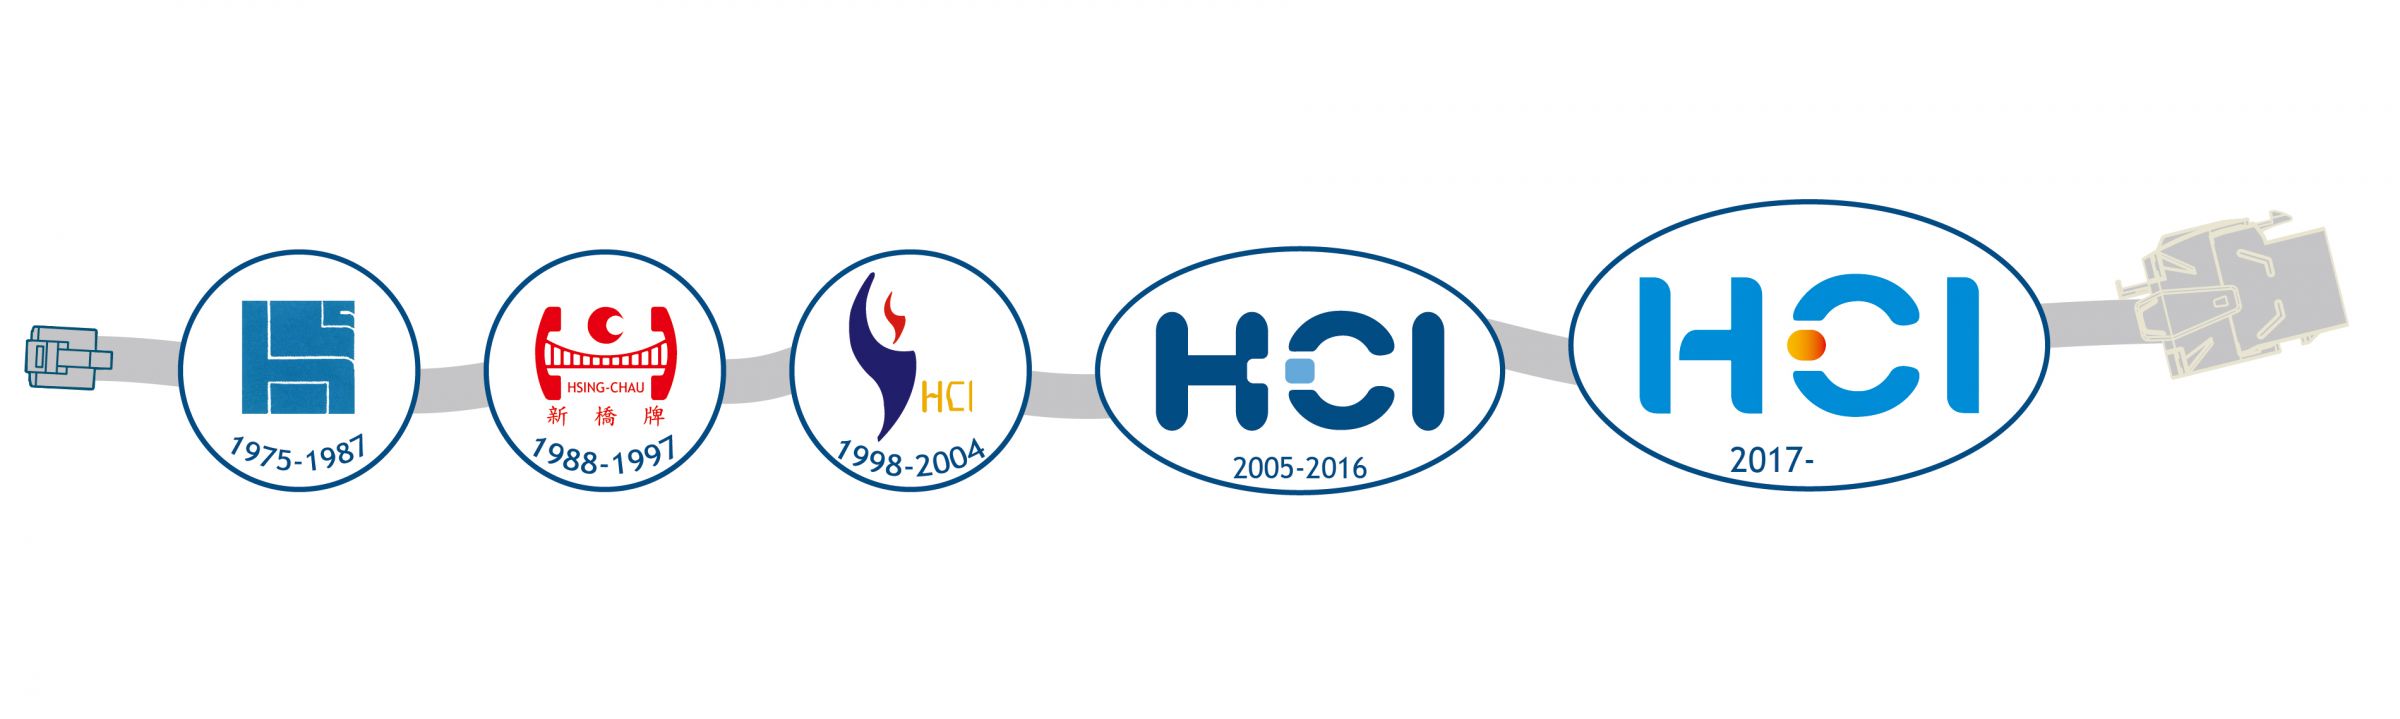 HCI Corporate Milestones